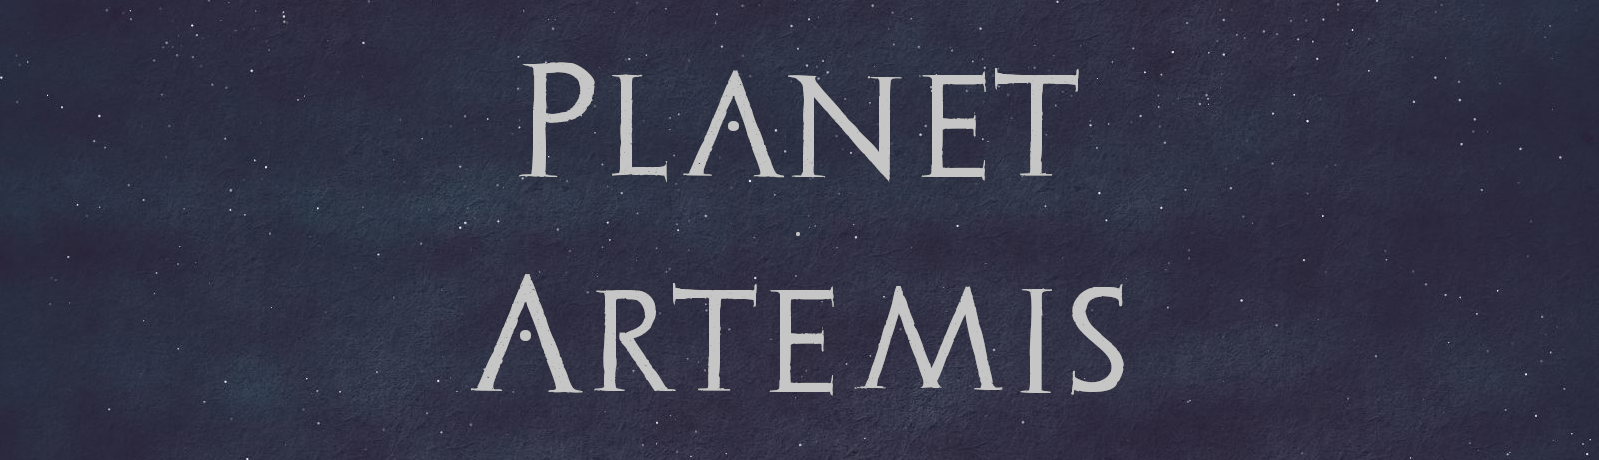 Planet Artemis